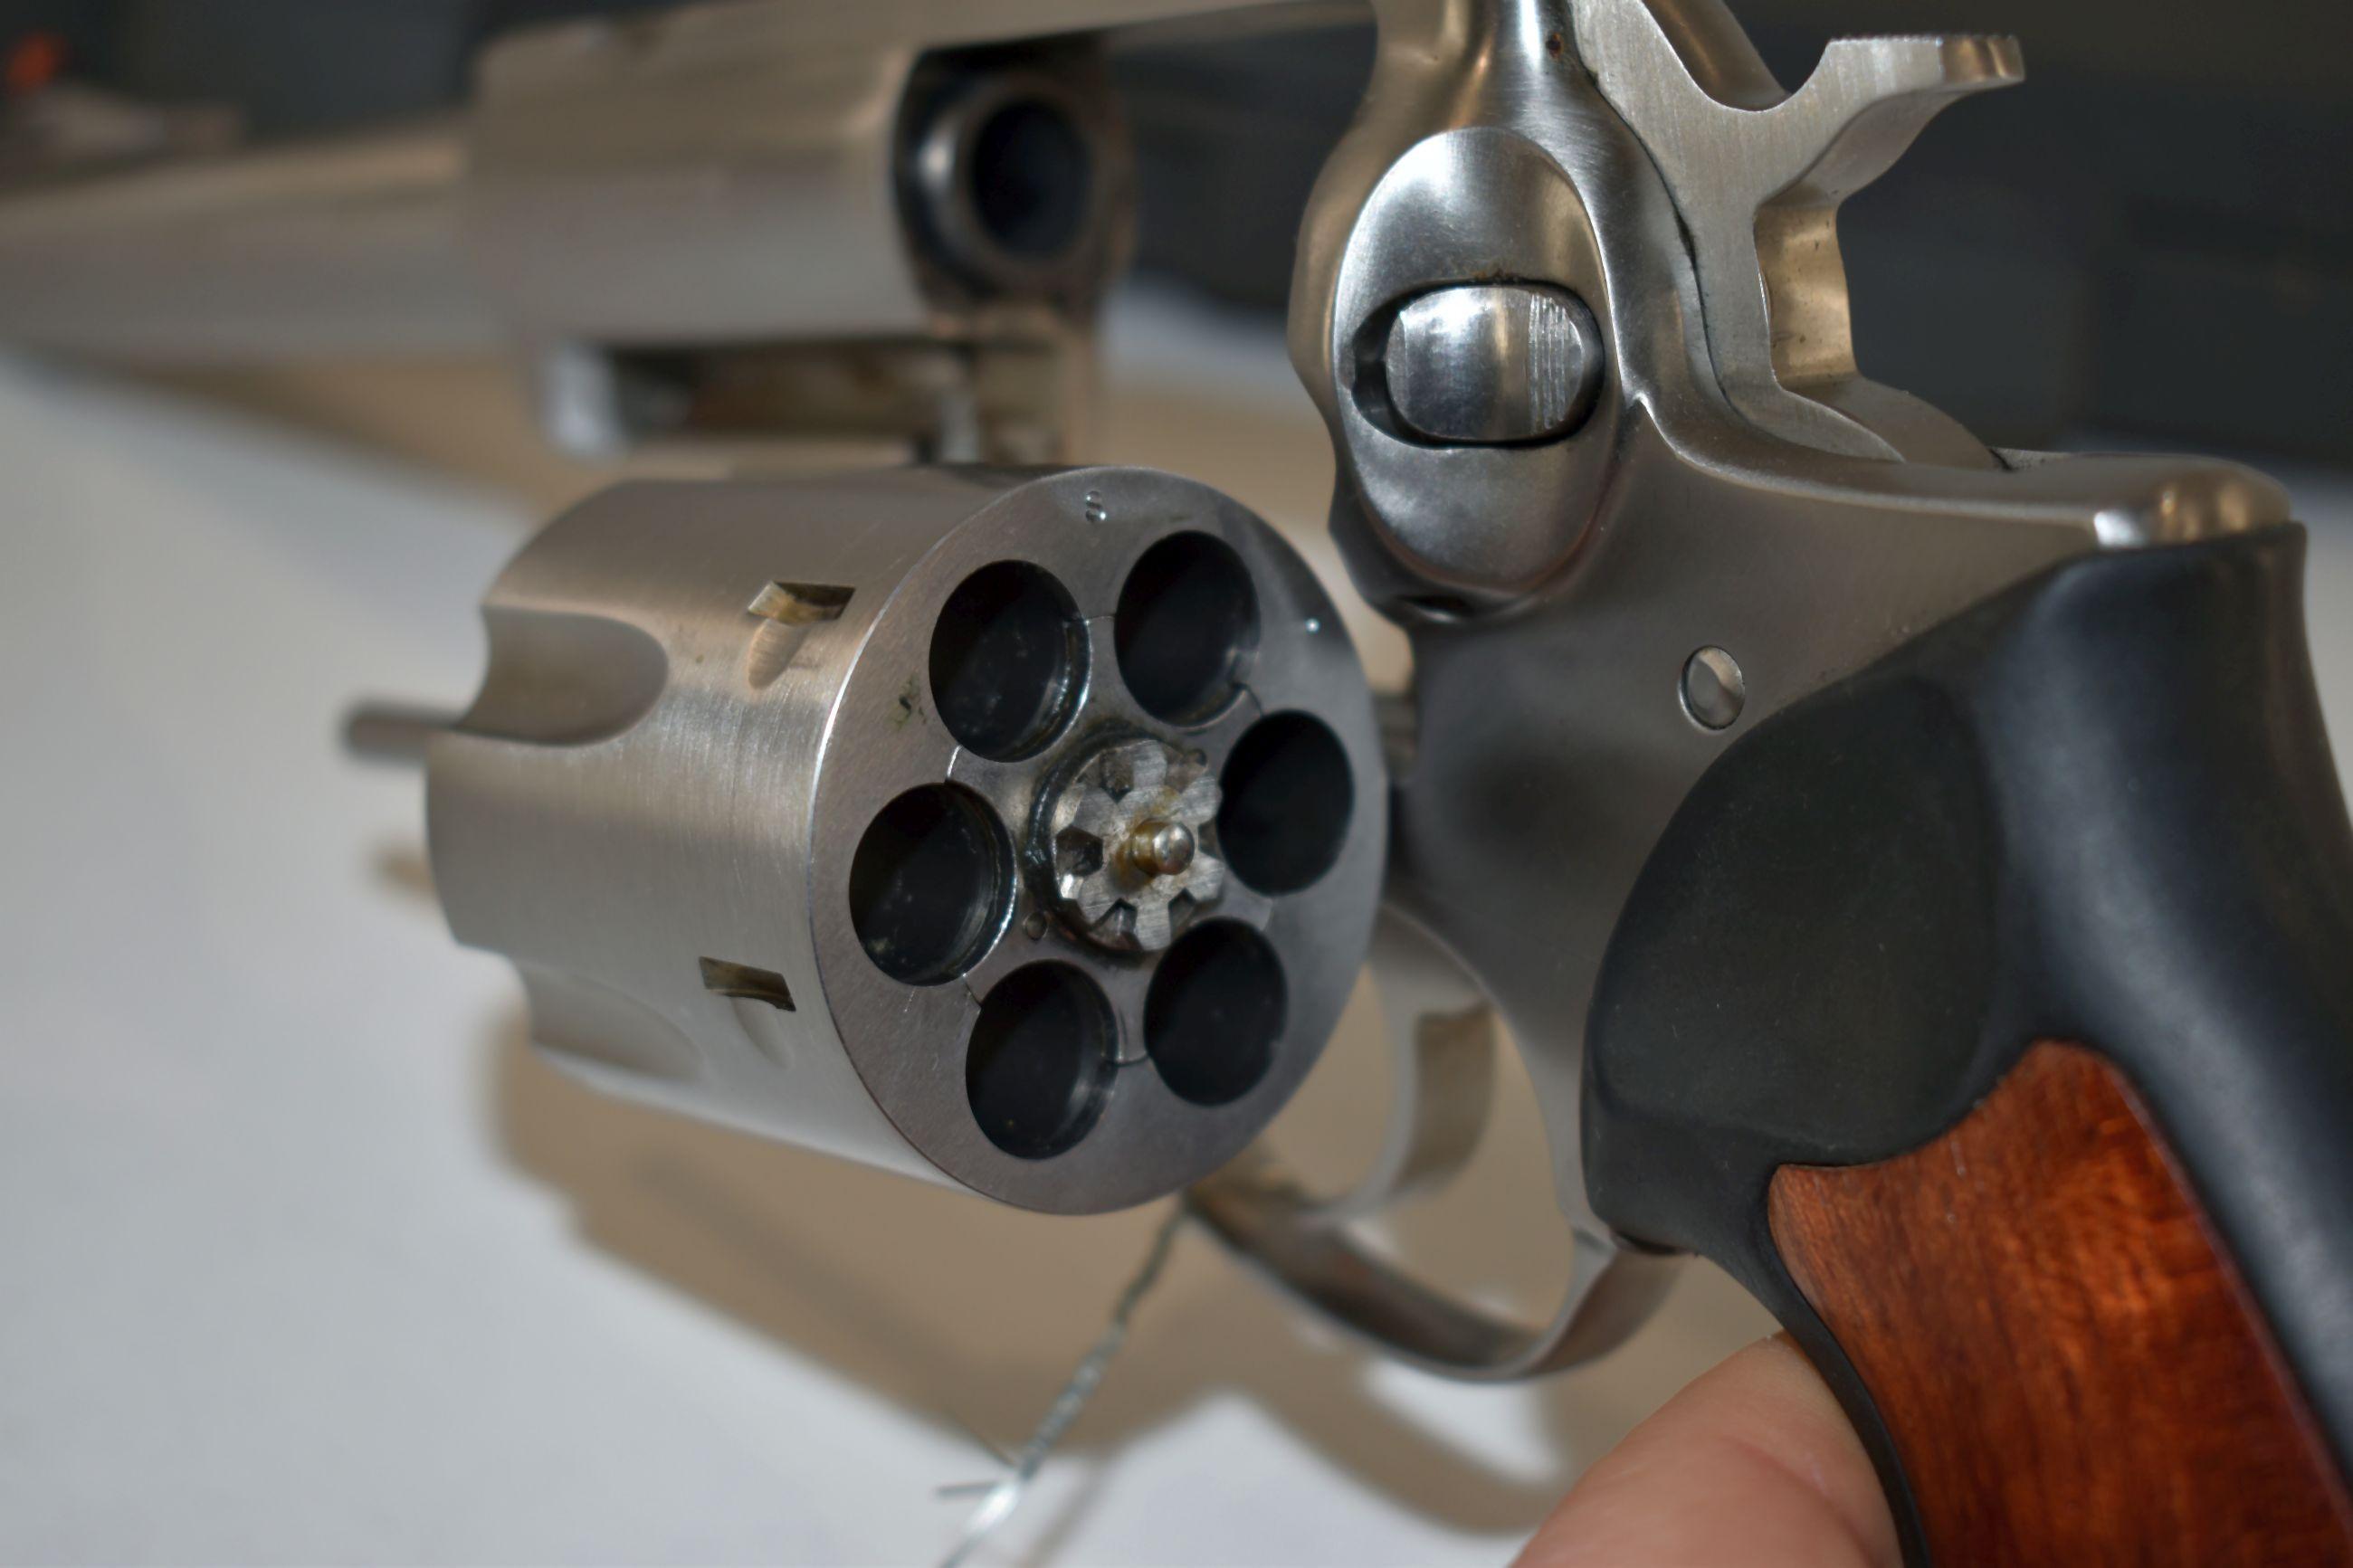 Ruger Redhawk 44 Magnum Cal Revolver, Stainless, 7 1/2" Barrel, 6 Shot, Scope Rings In Hard Case, SN